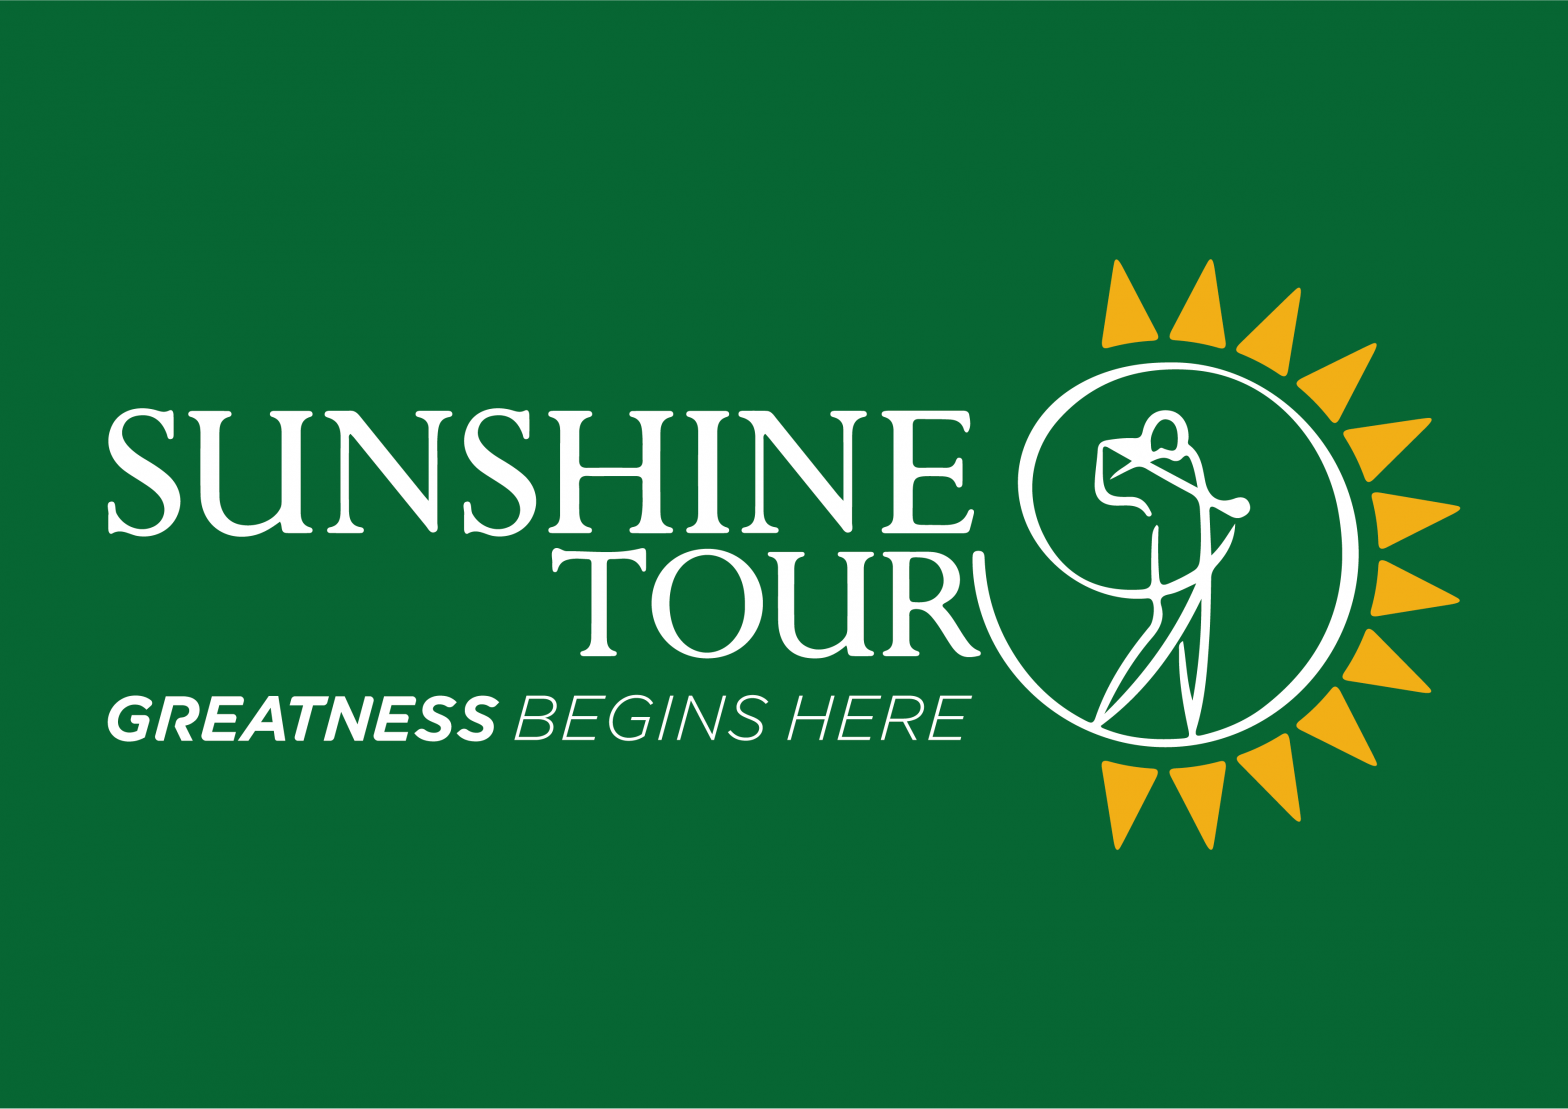 Sunshine Tour announces strong start to 2021